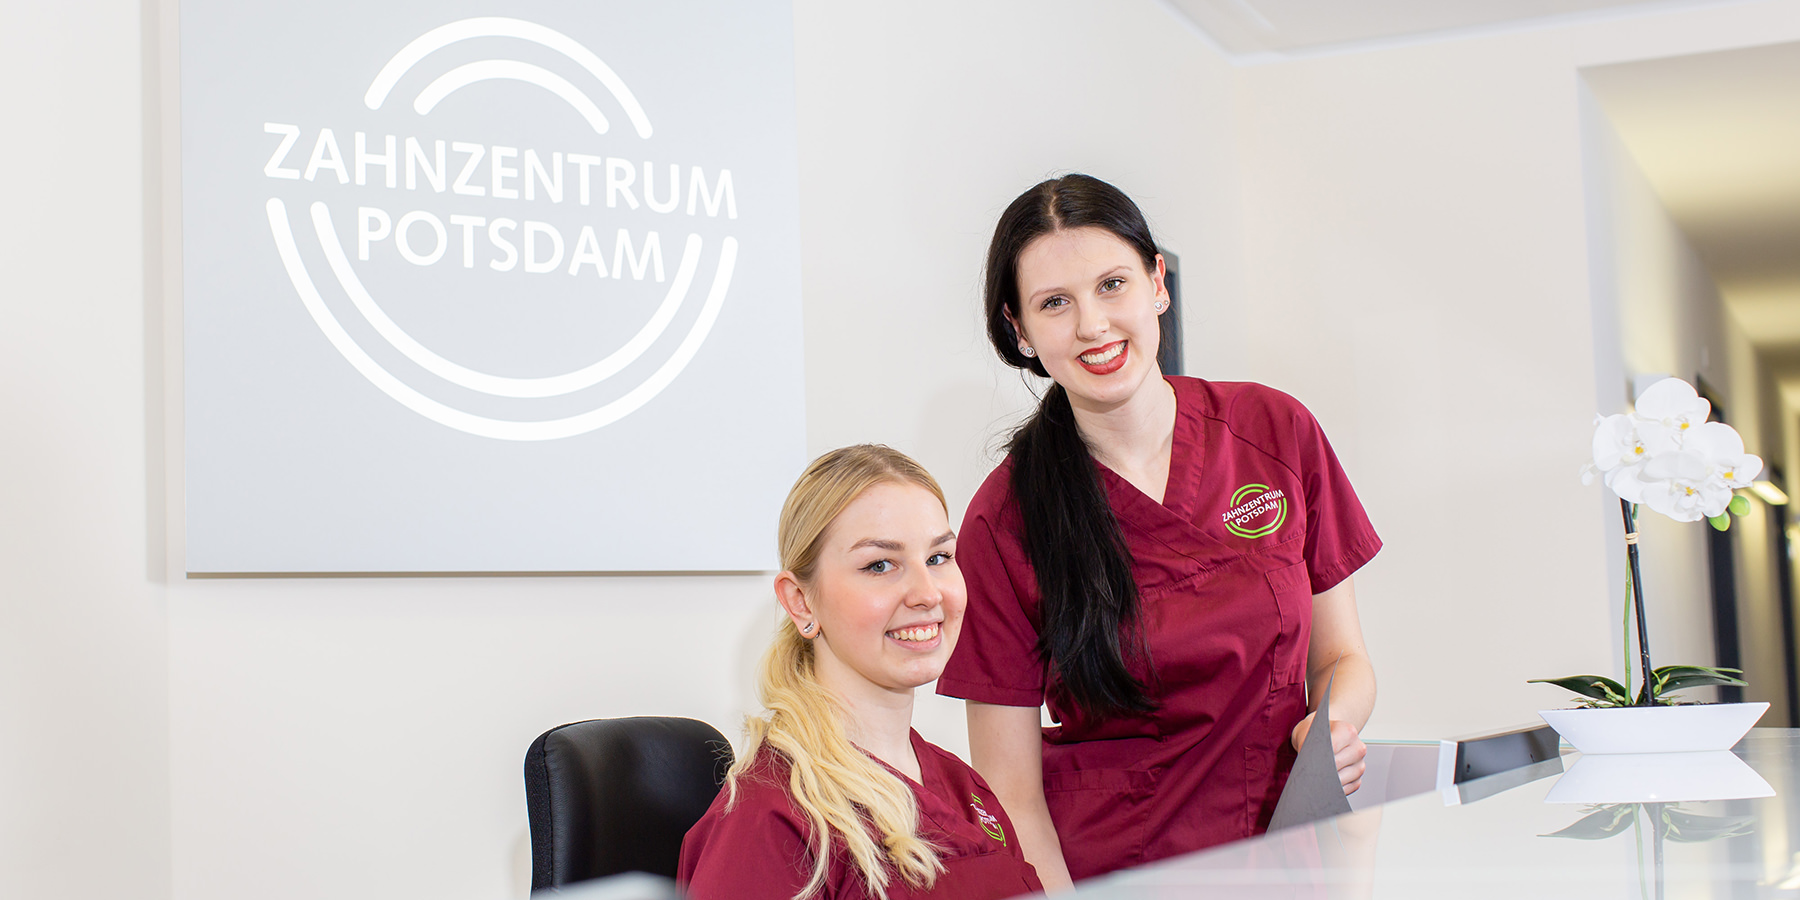 Zahnarzt Potsdam - Zahnzentrum - Empfang